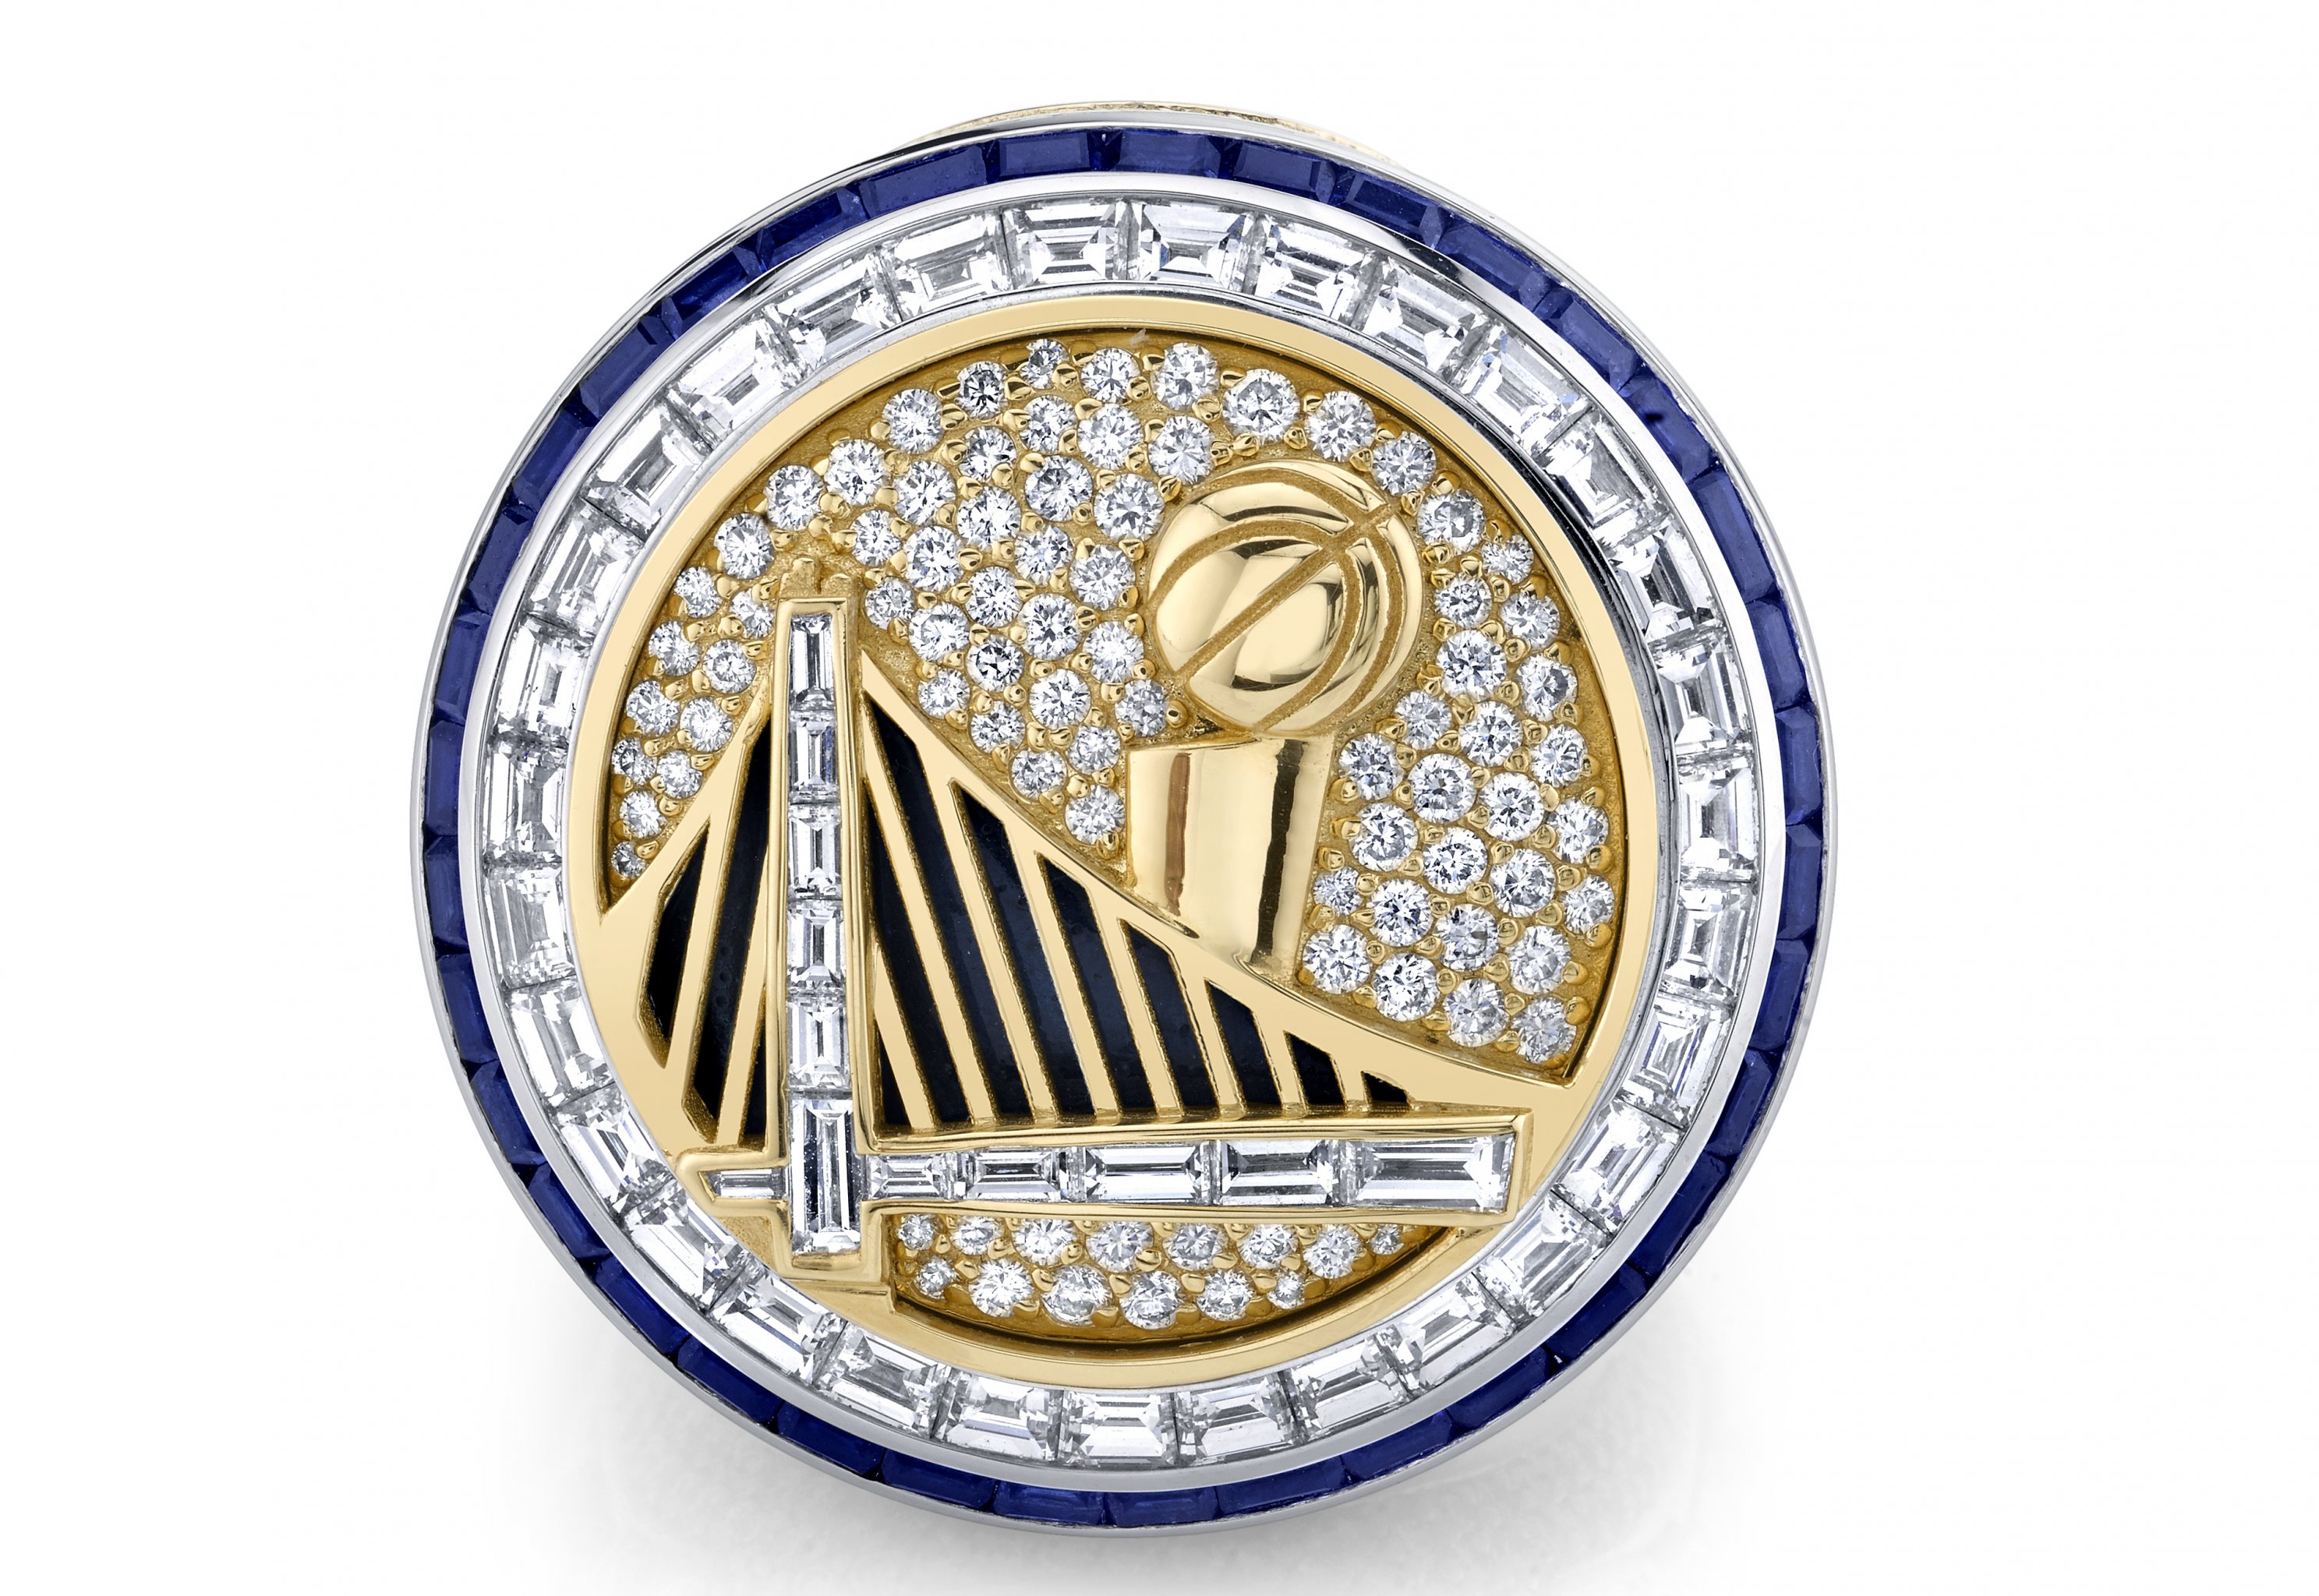 2017 Golden State Warriors NBA Championship Ring. Basketball